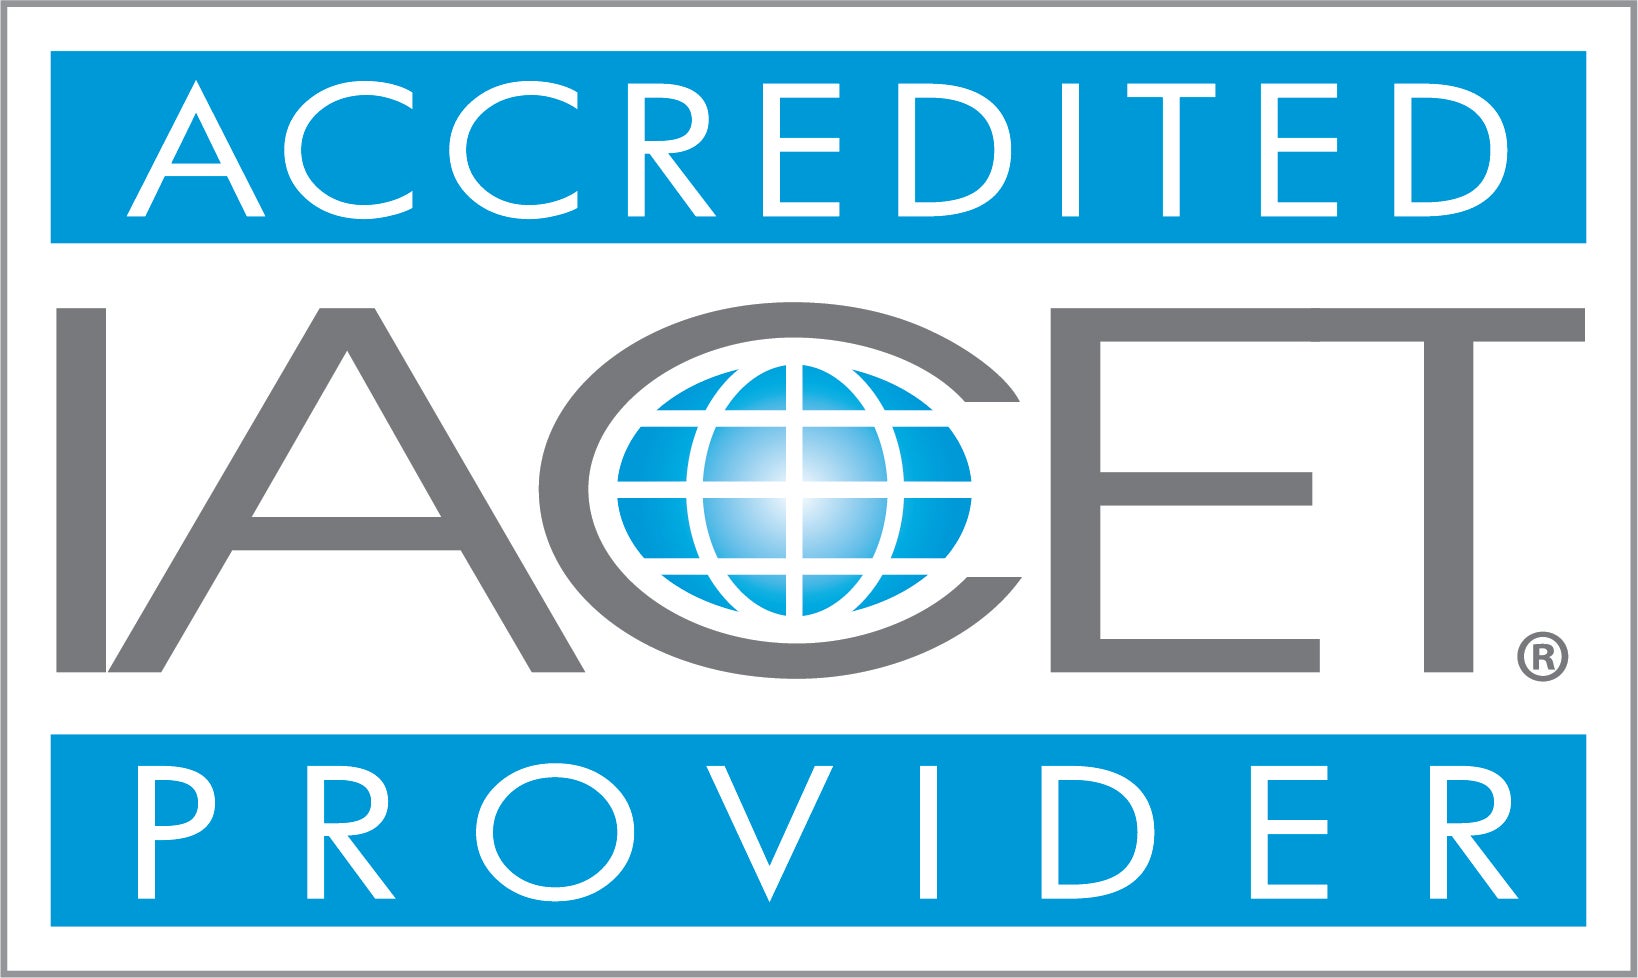 Accredited Provider logo